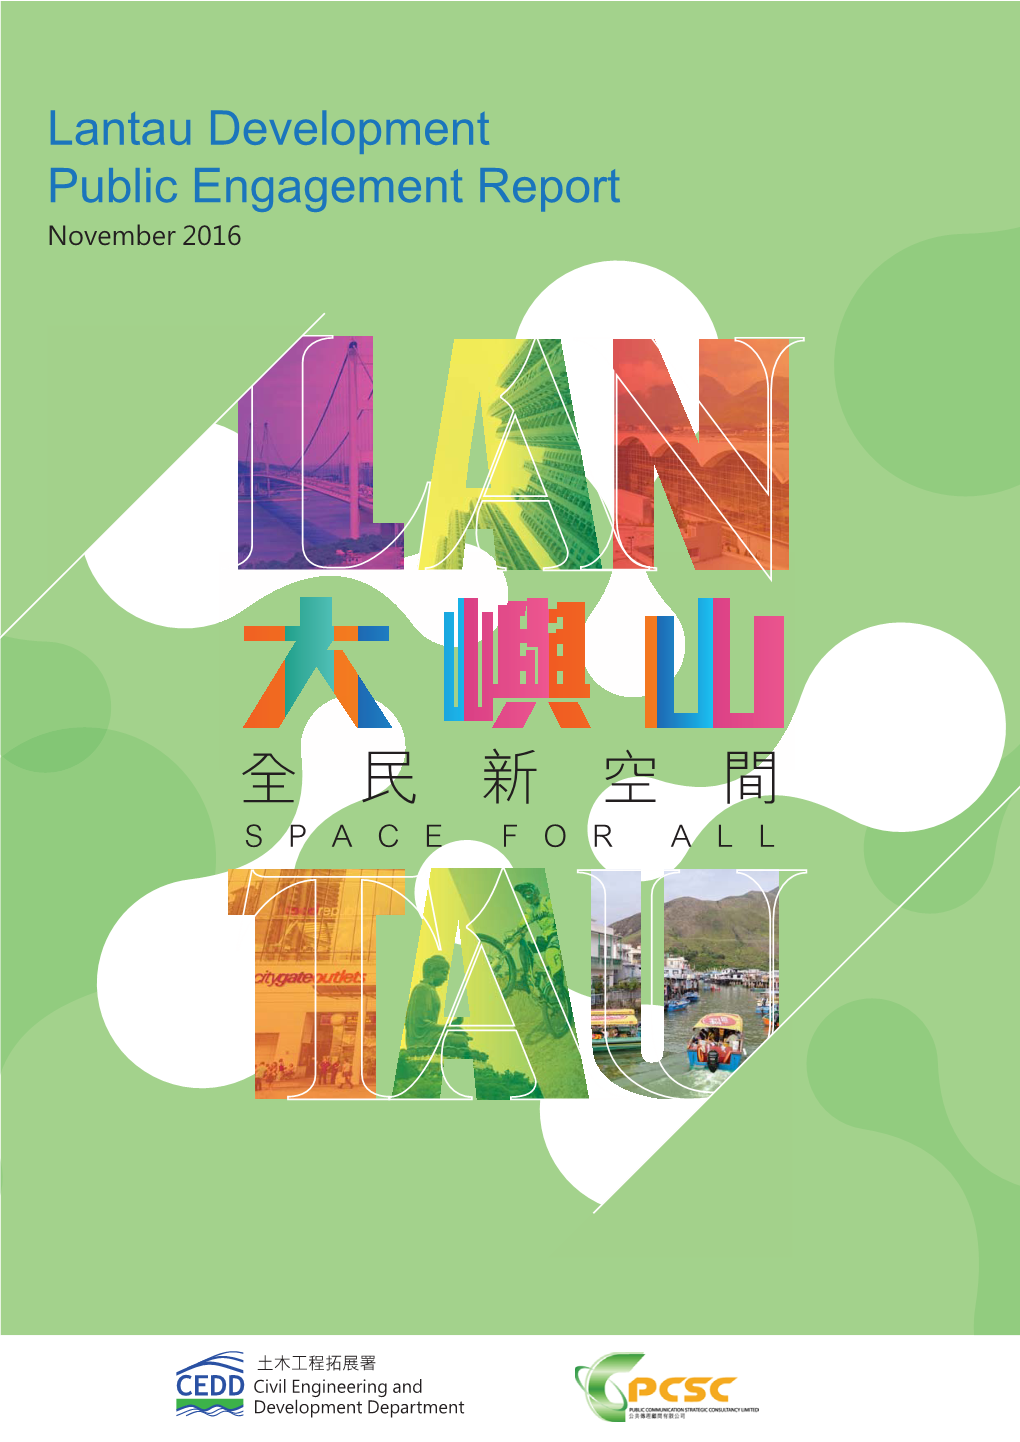 Lantau Development Public Engagement Report November 2016